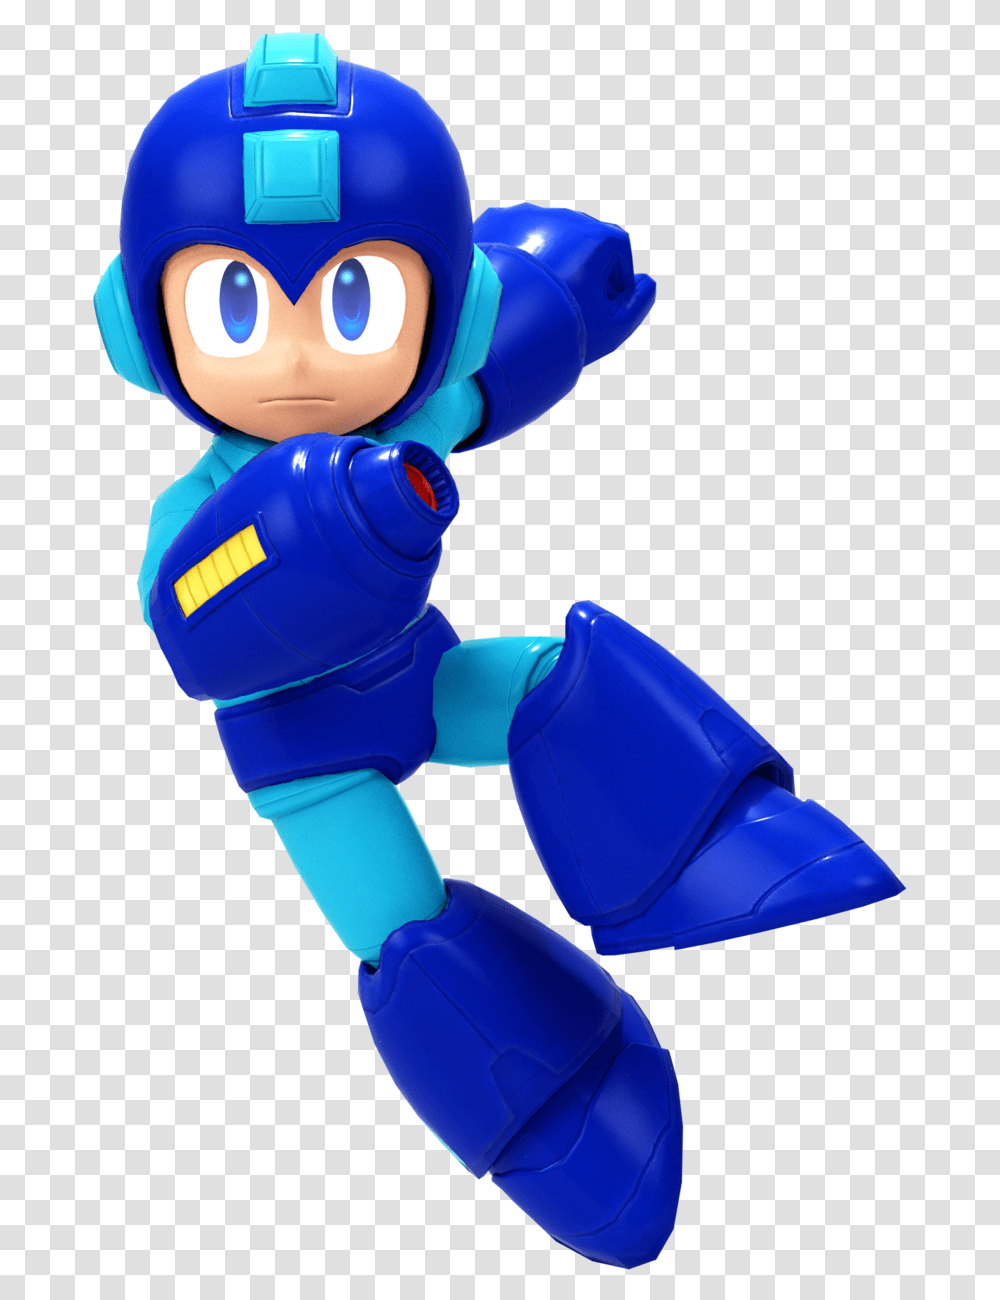 Mega Man Image, Toy, Robot Transparent Png